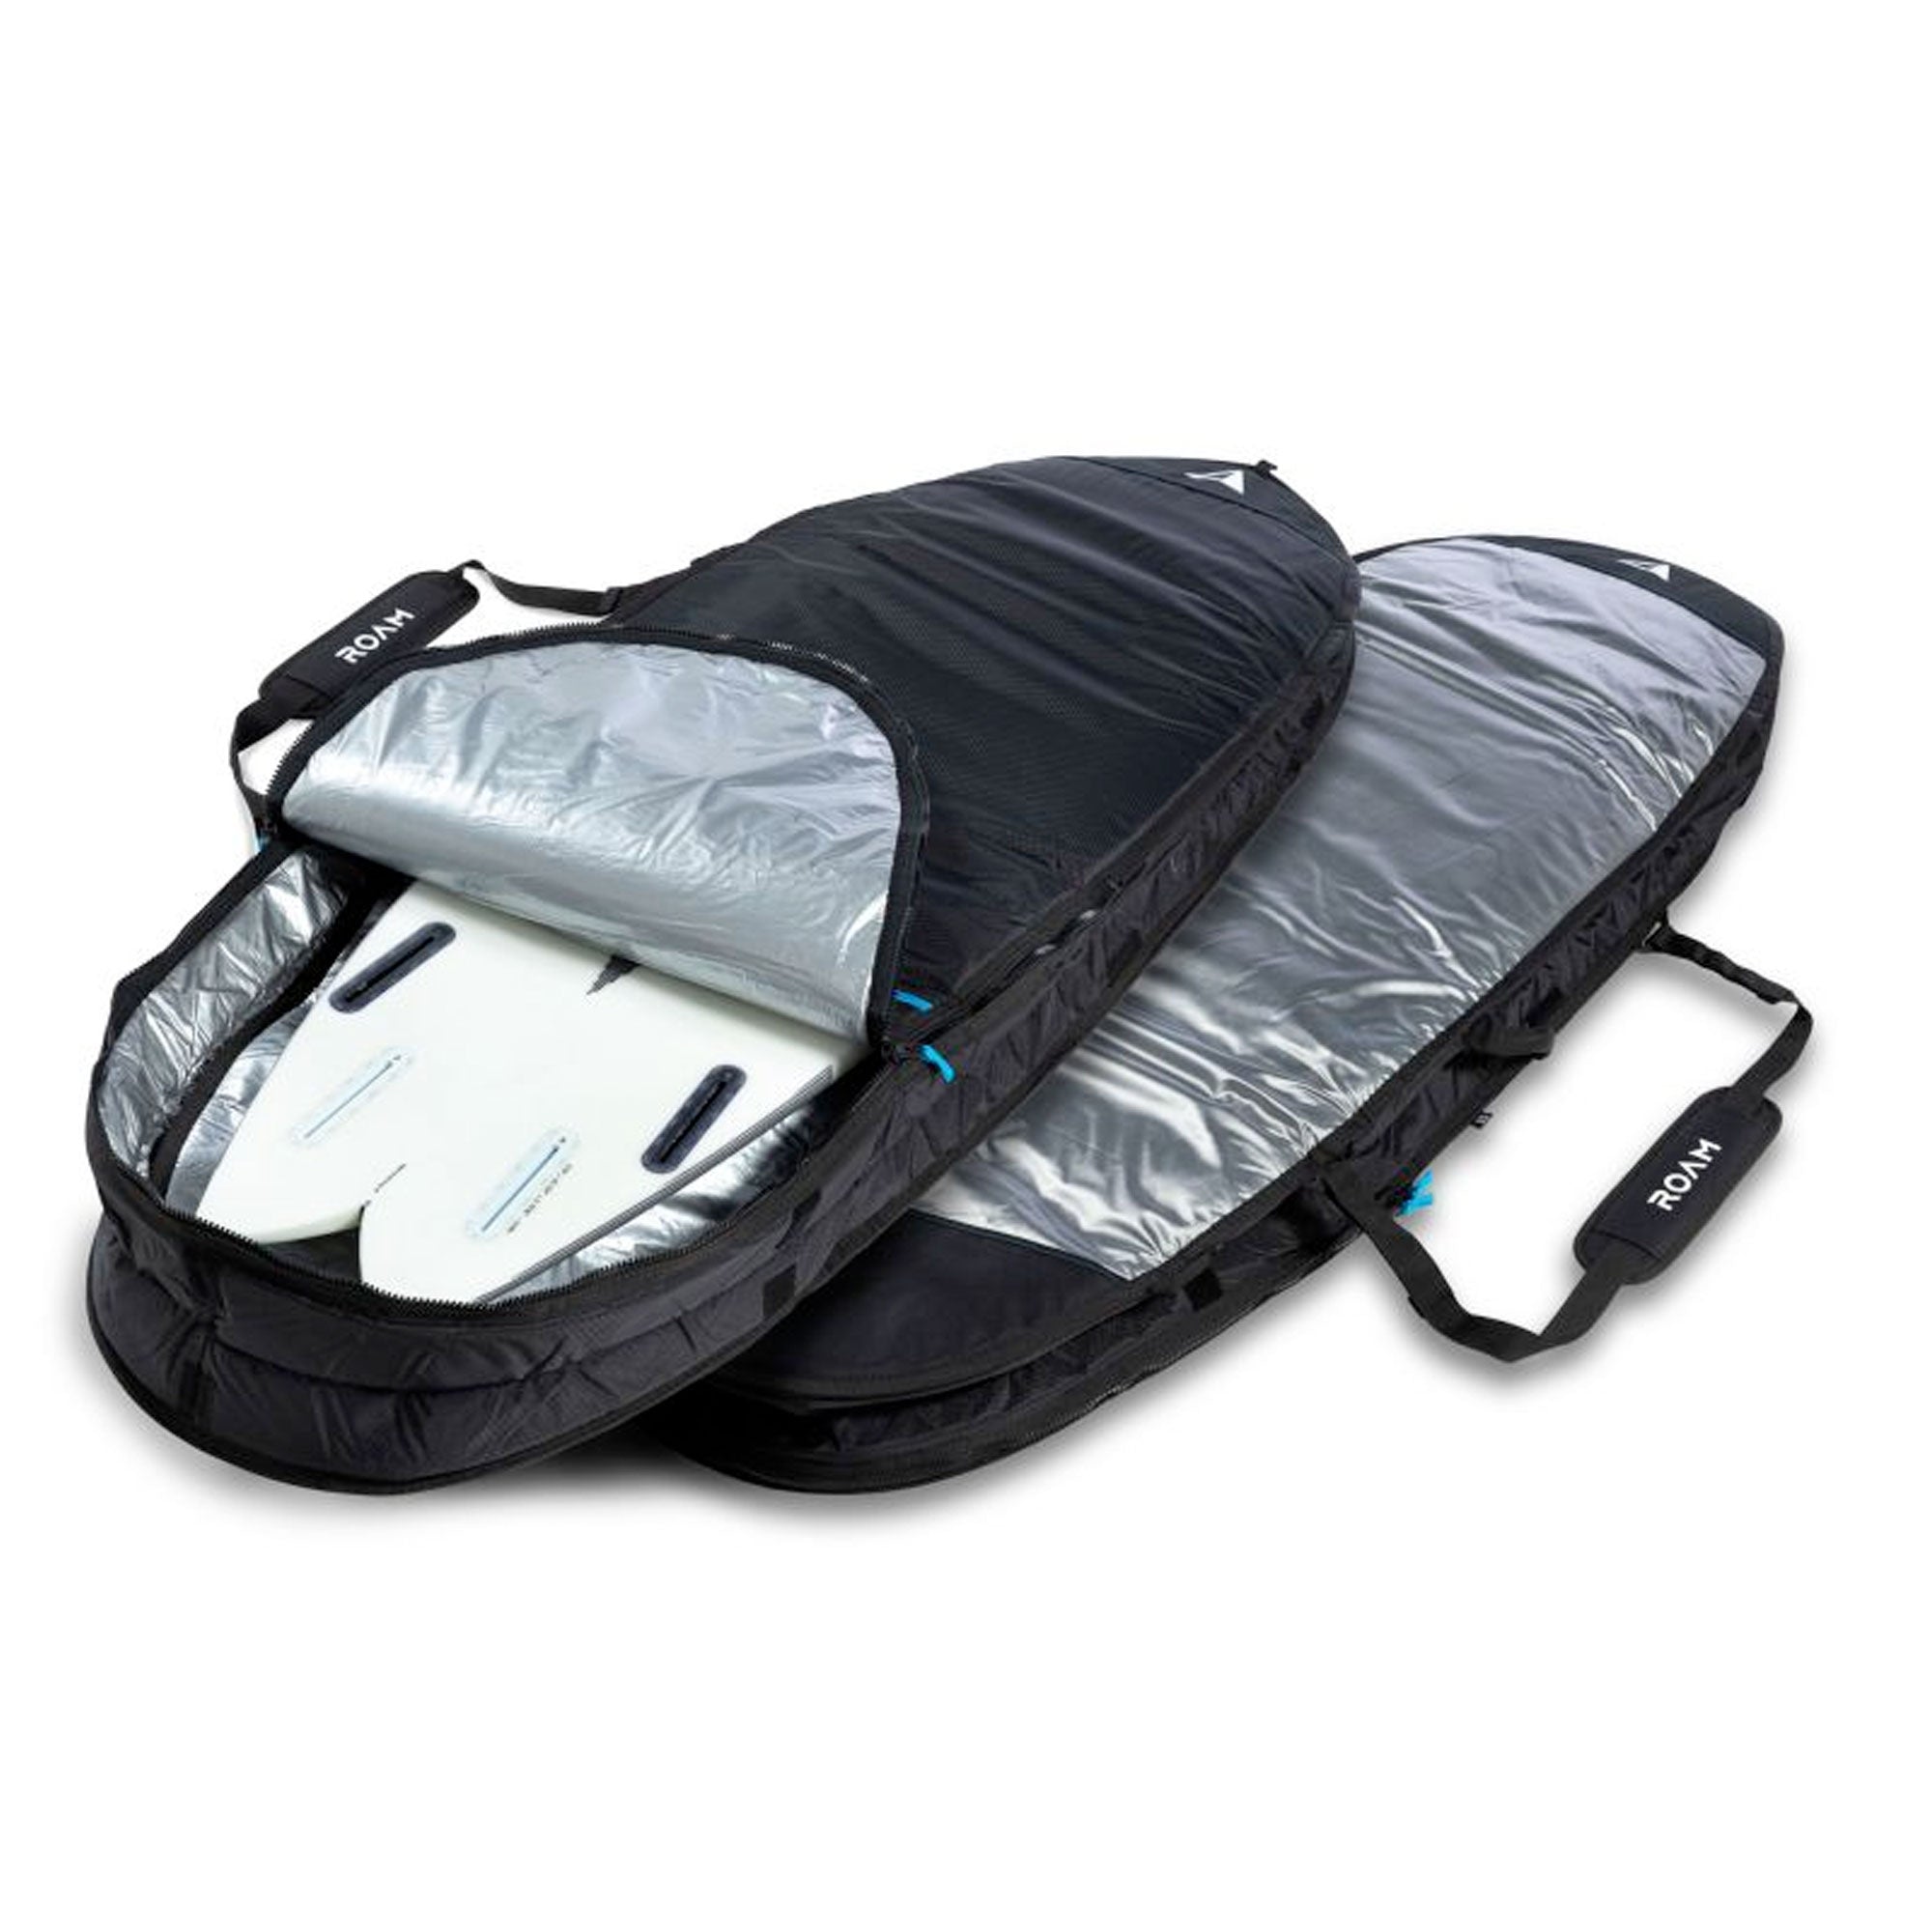 Roam Tech Plus Double Slim Hybrid Surfboard Bag